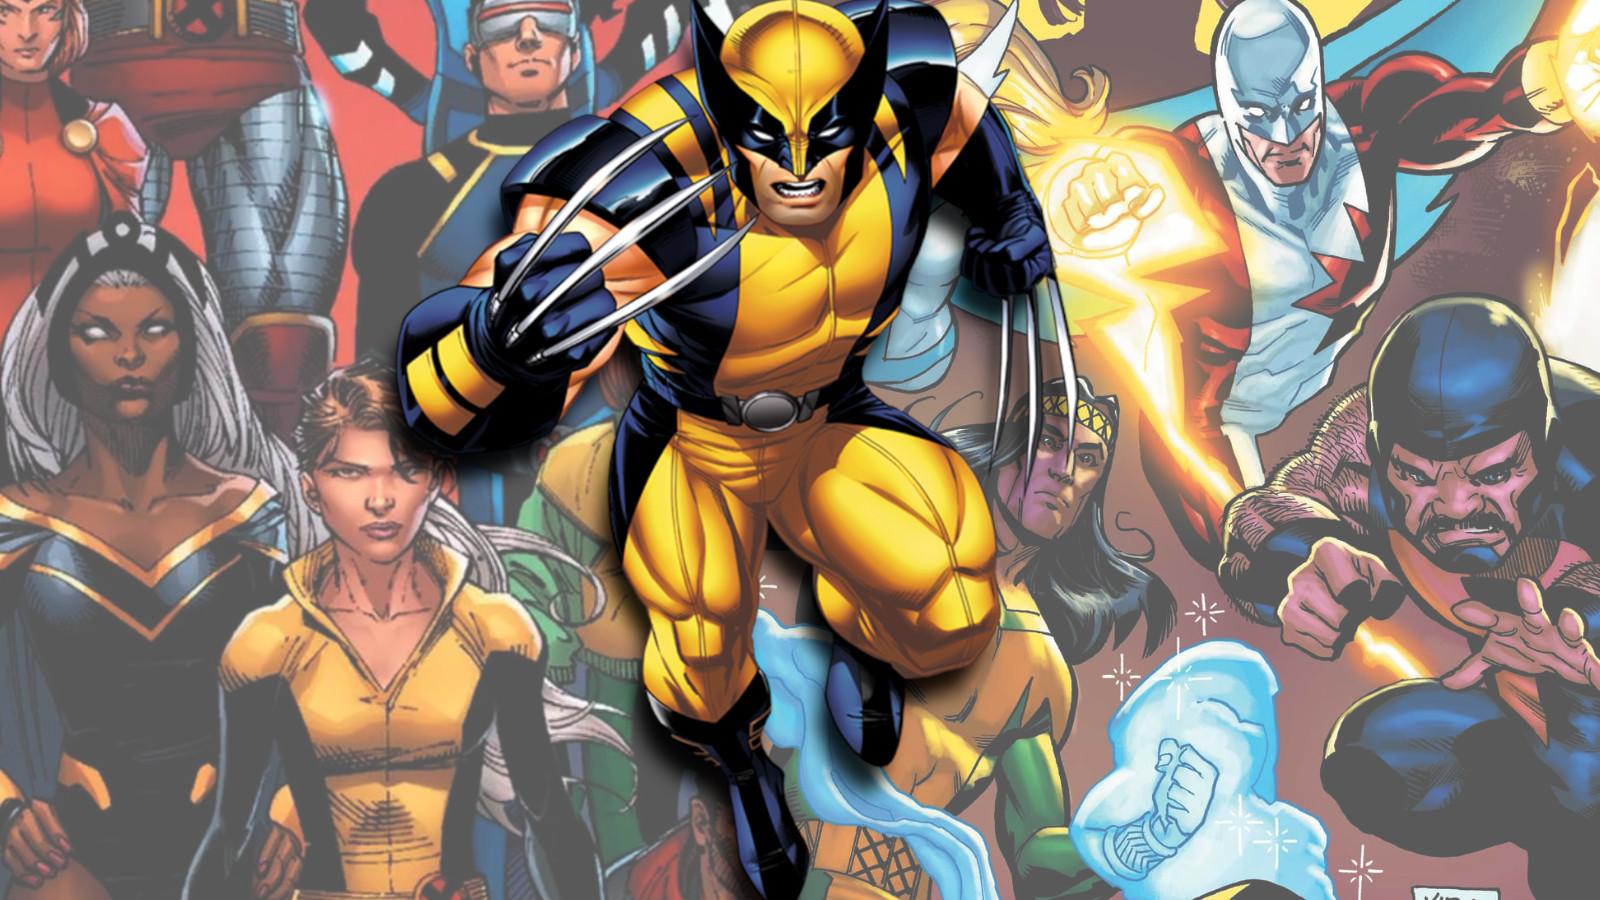 Wolverine alongside the X-Men and Alpha Flight